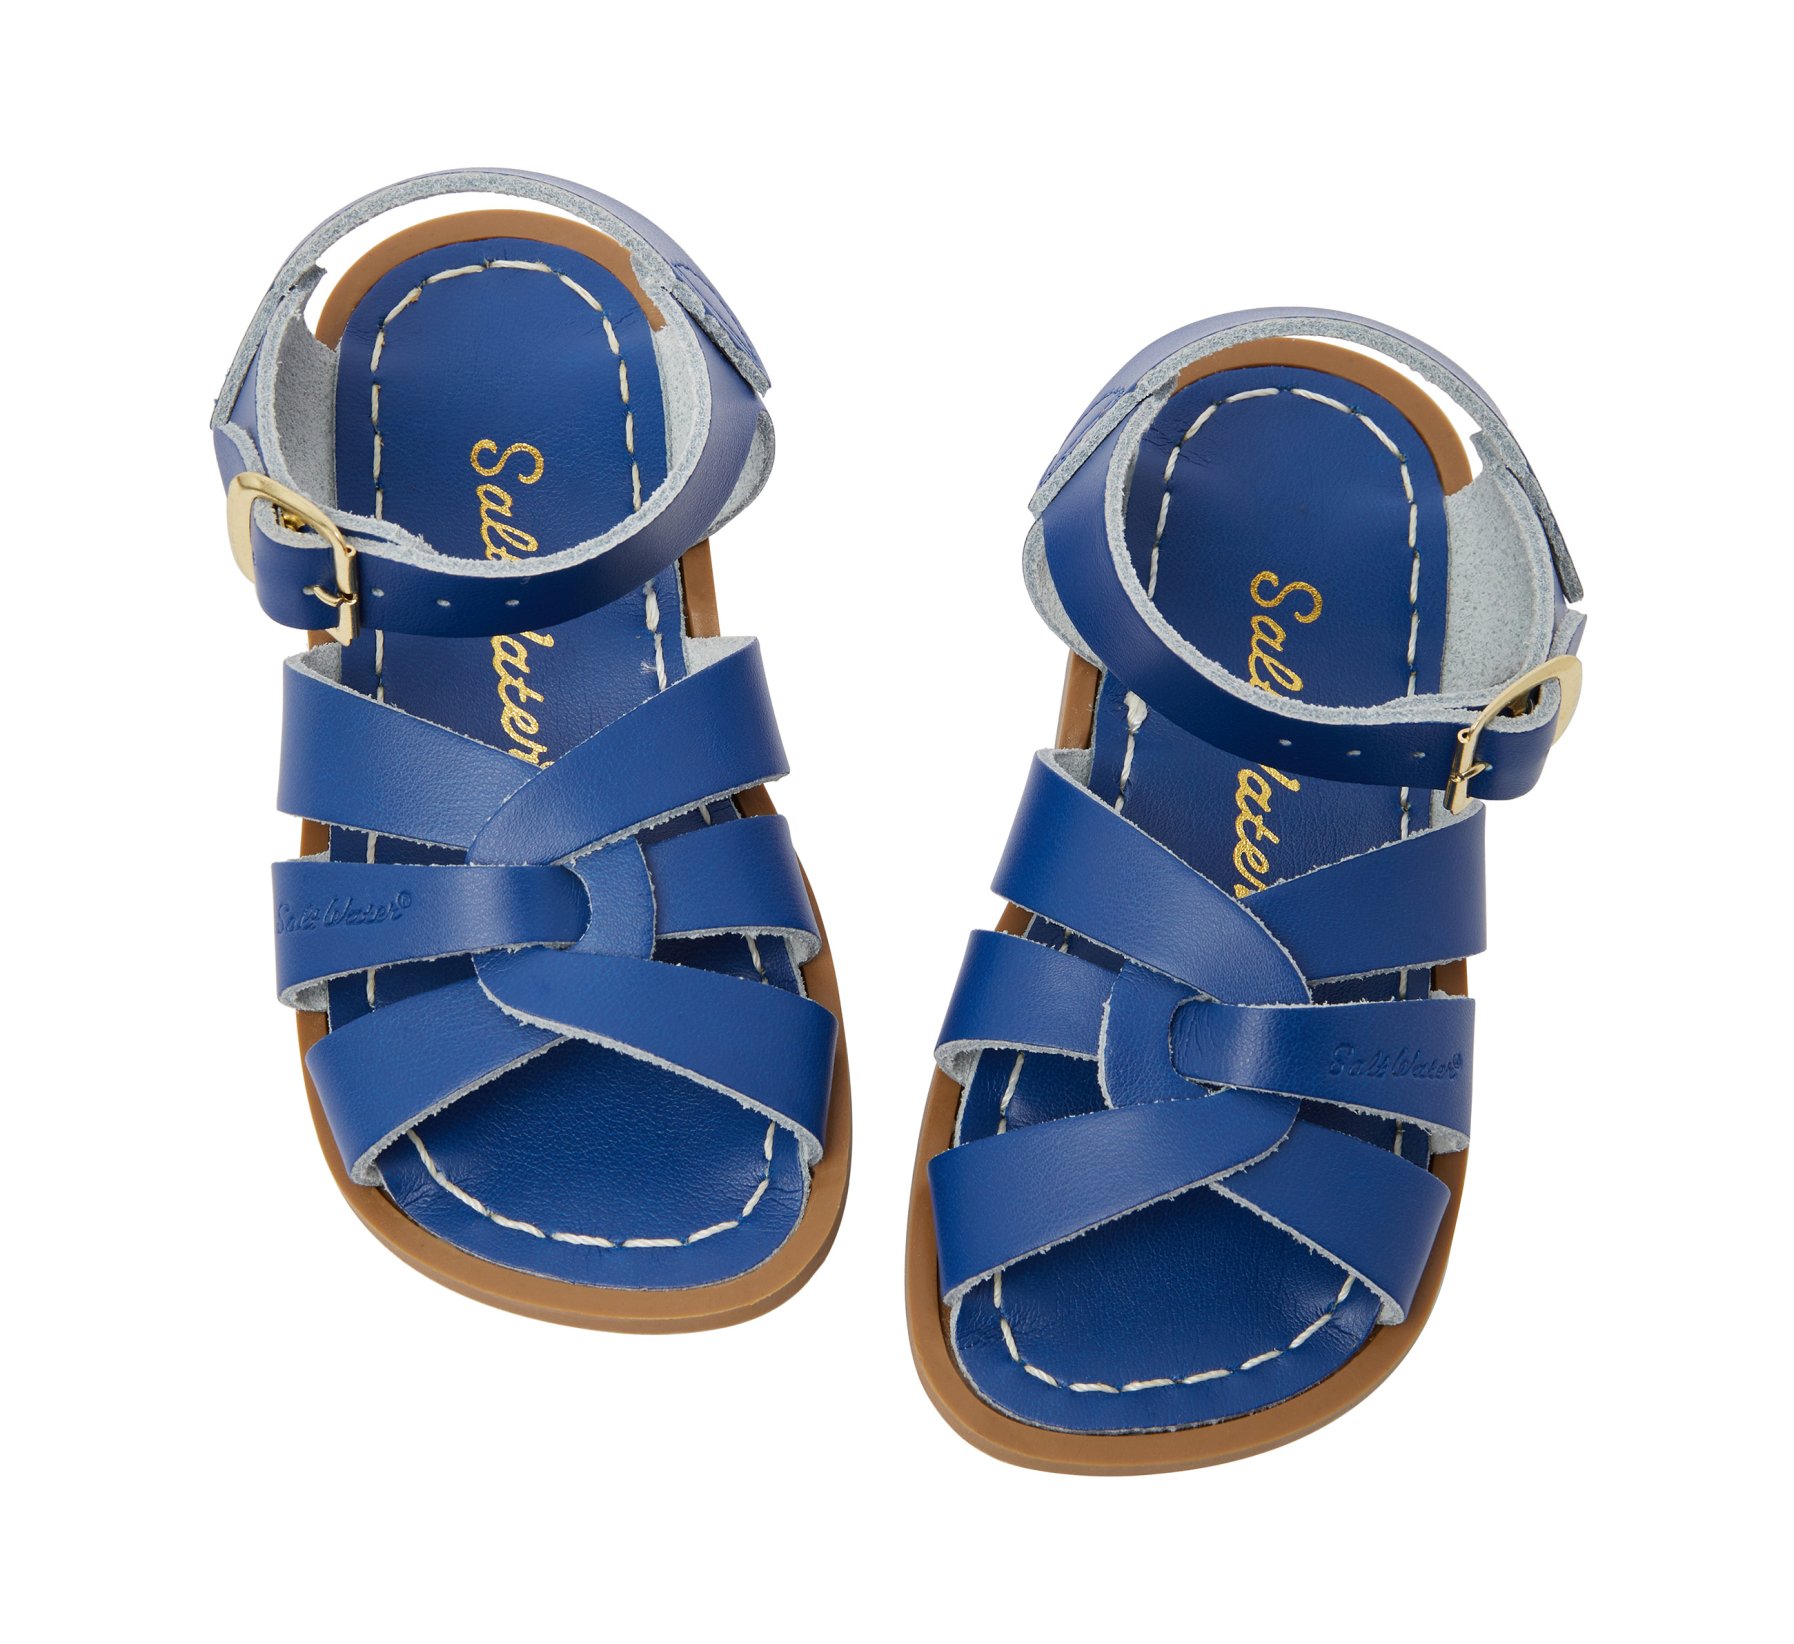 Original Cobalt Kids Sandals - Salt Water Sandals